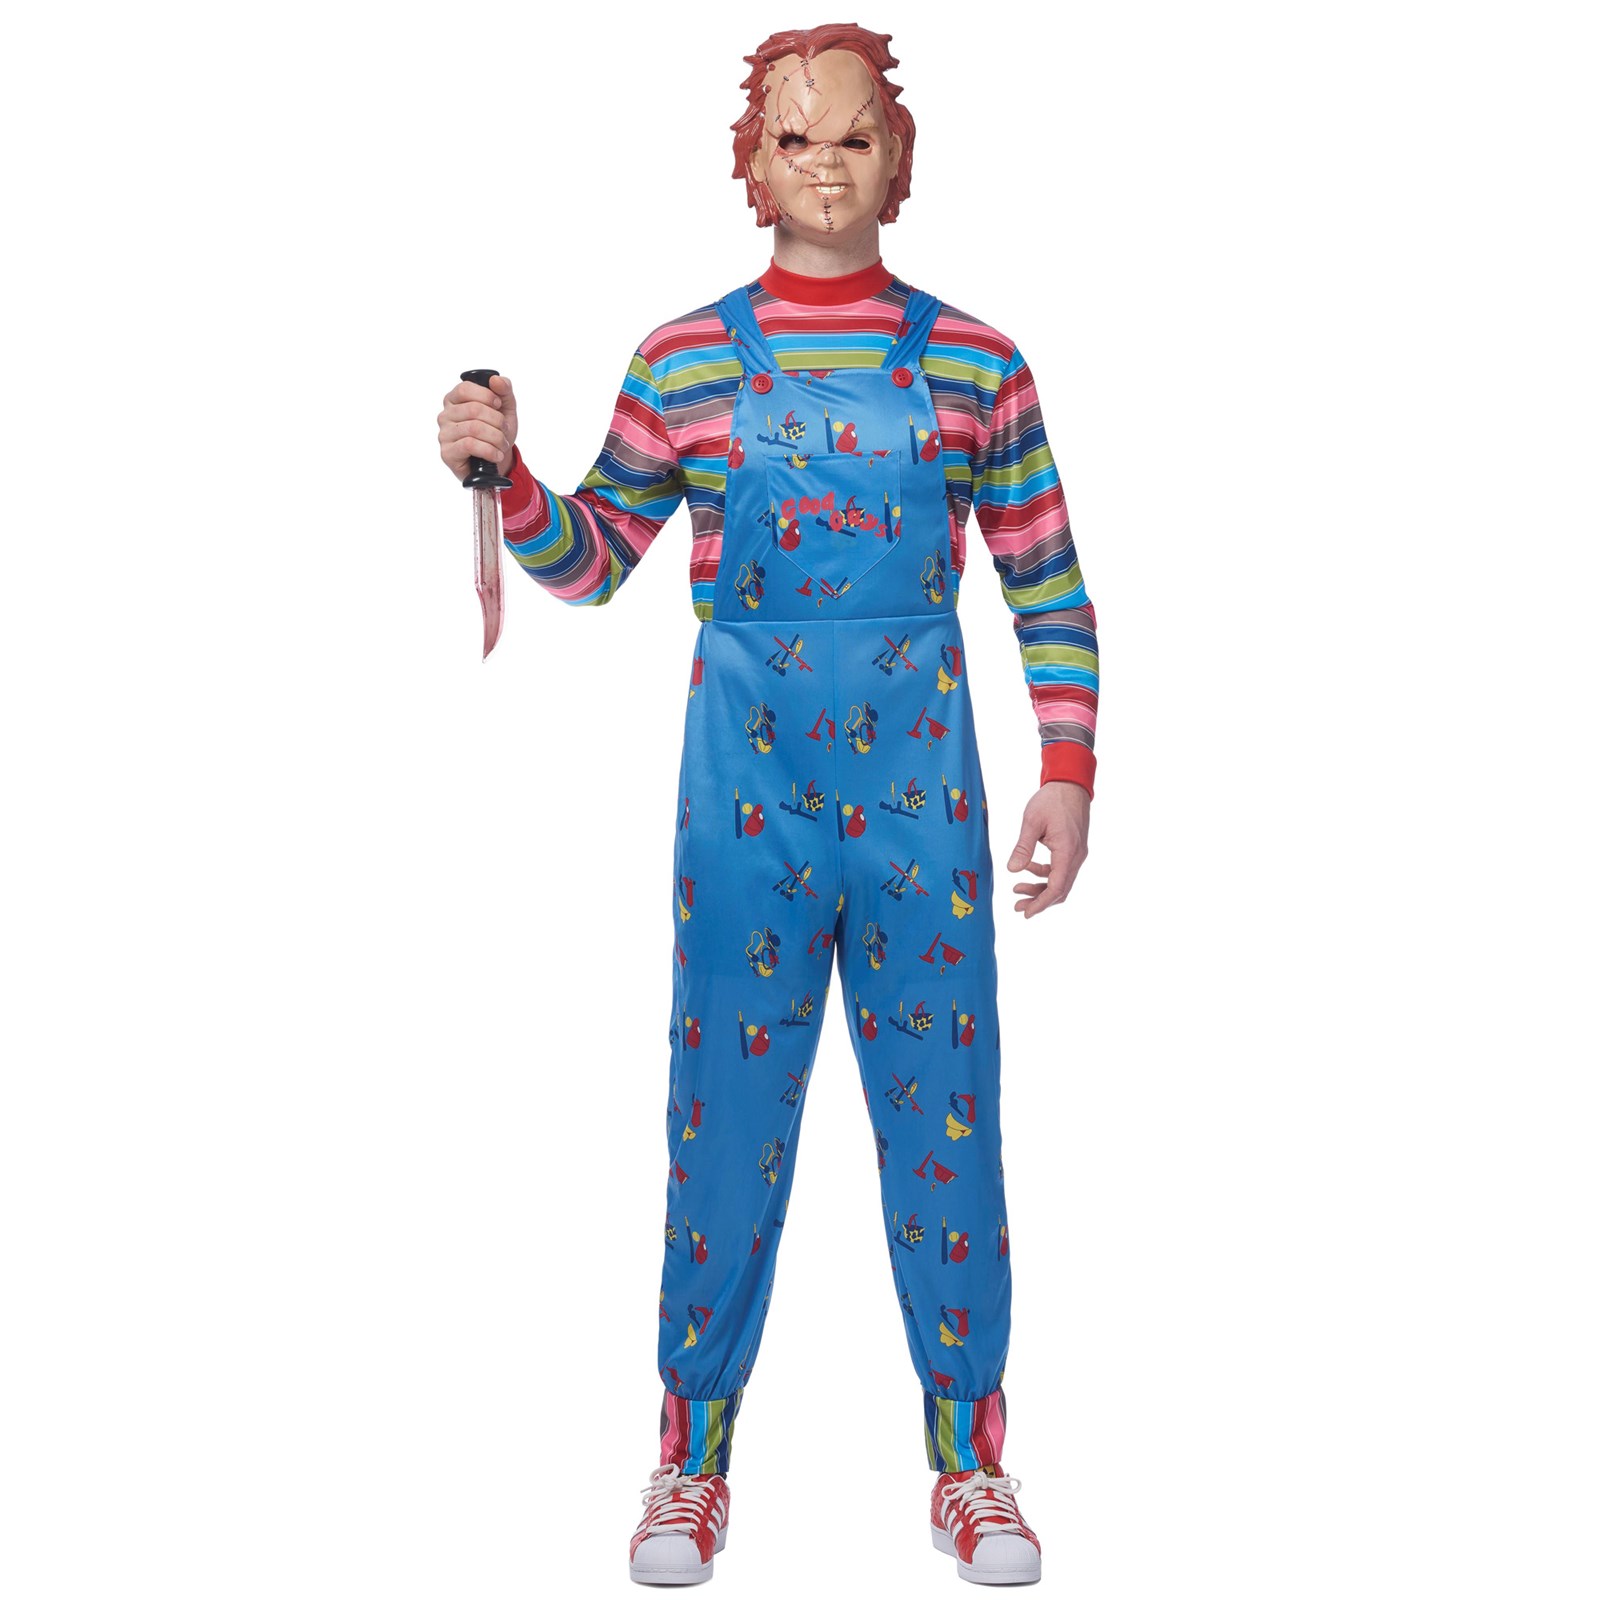 Chucky Licensed Men's Halloween Fancy-Dress Costume for Adult, Standard - image 1 of 2